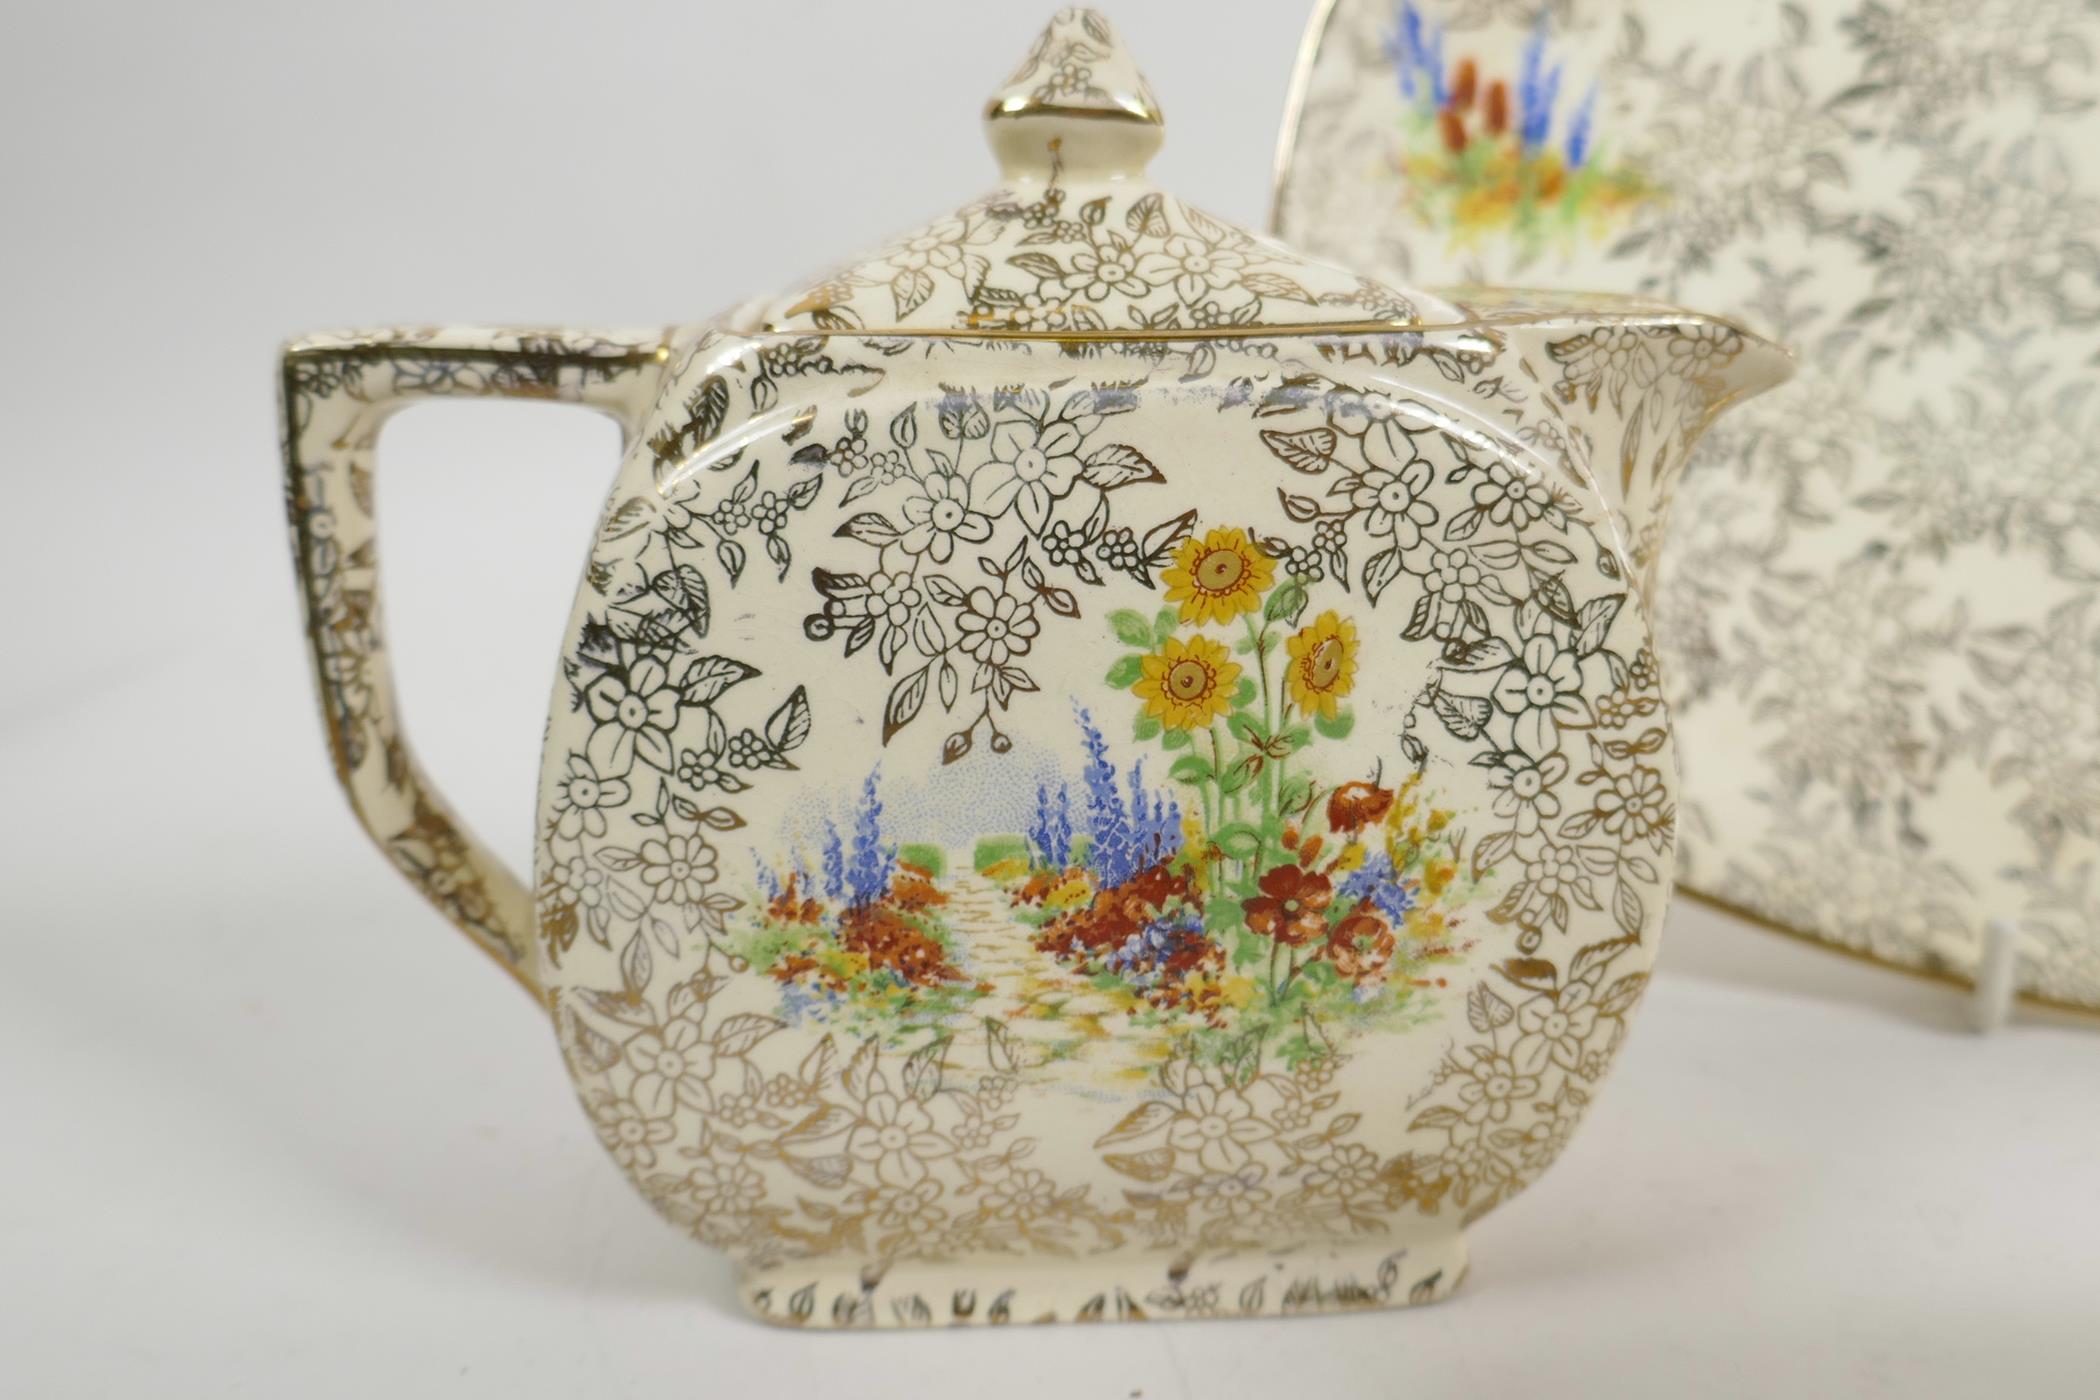 An Art Deco Empire Ware porcelain Garden Pattern teapot, water jug, milk jug and serving plate (teap - Image 5 of 6